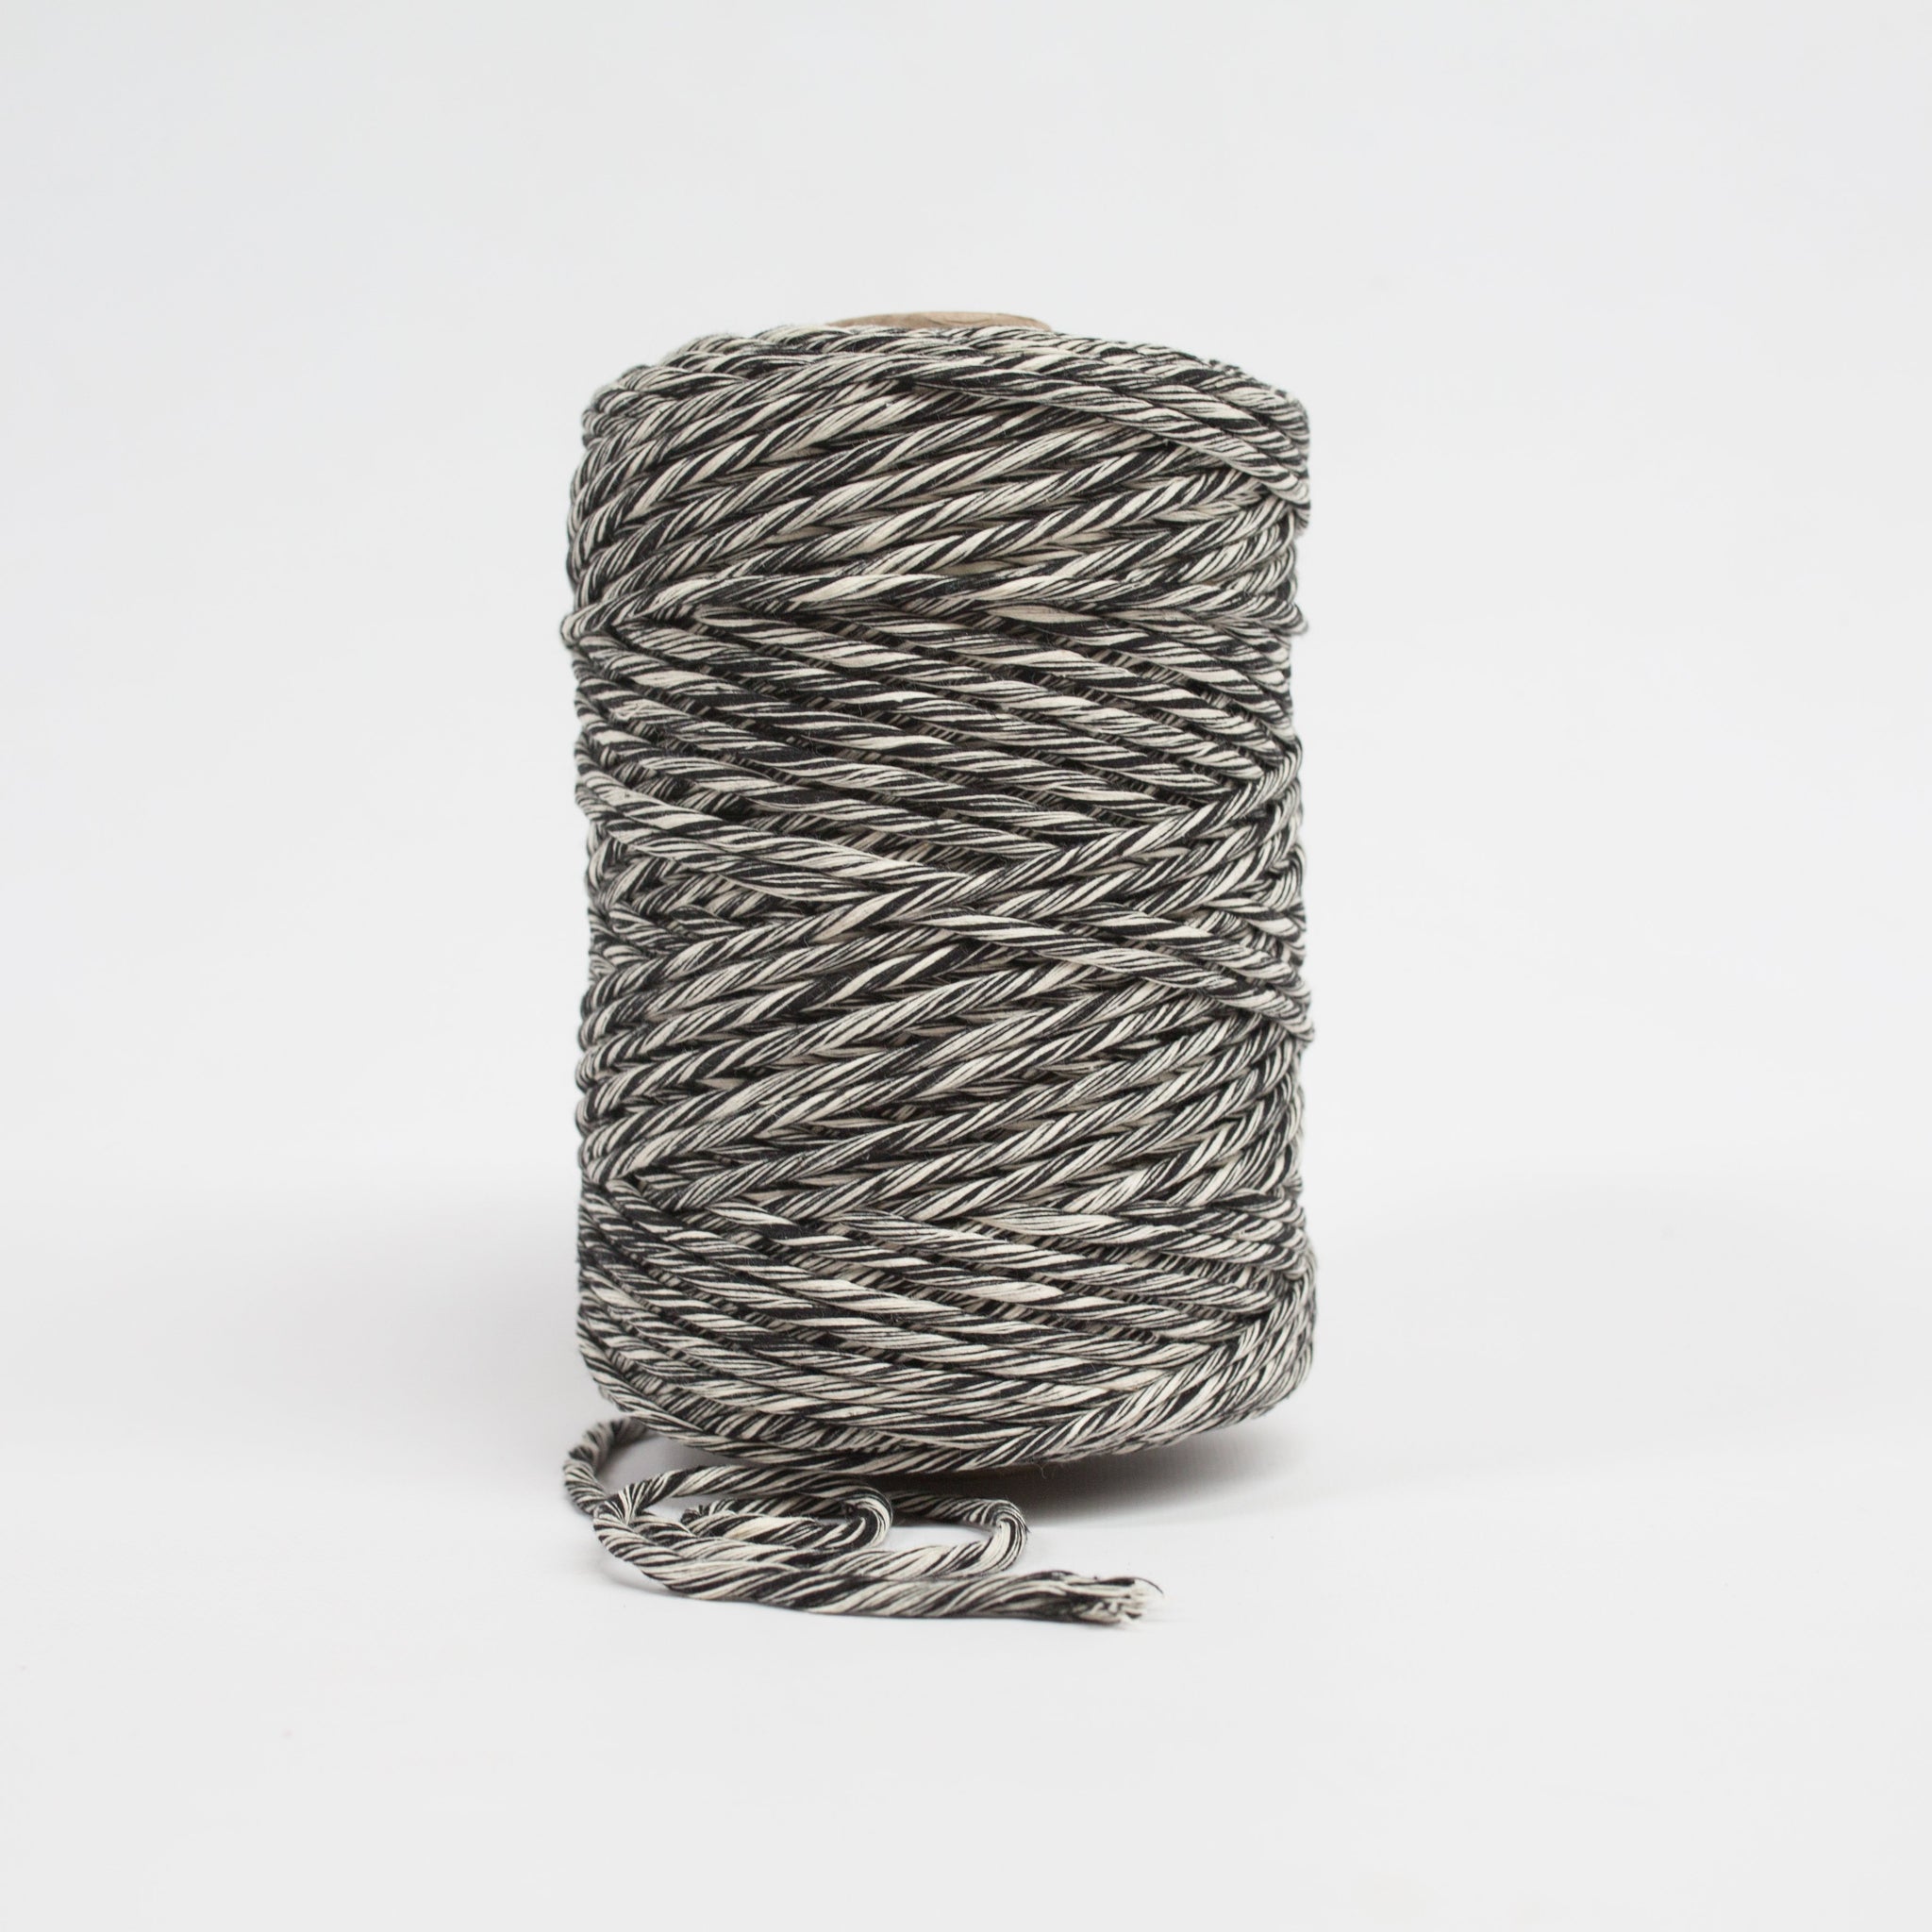 Black Macrame Cotton String - Mary Maker Studio - Macrame & Weaving  Supplies and Education.